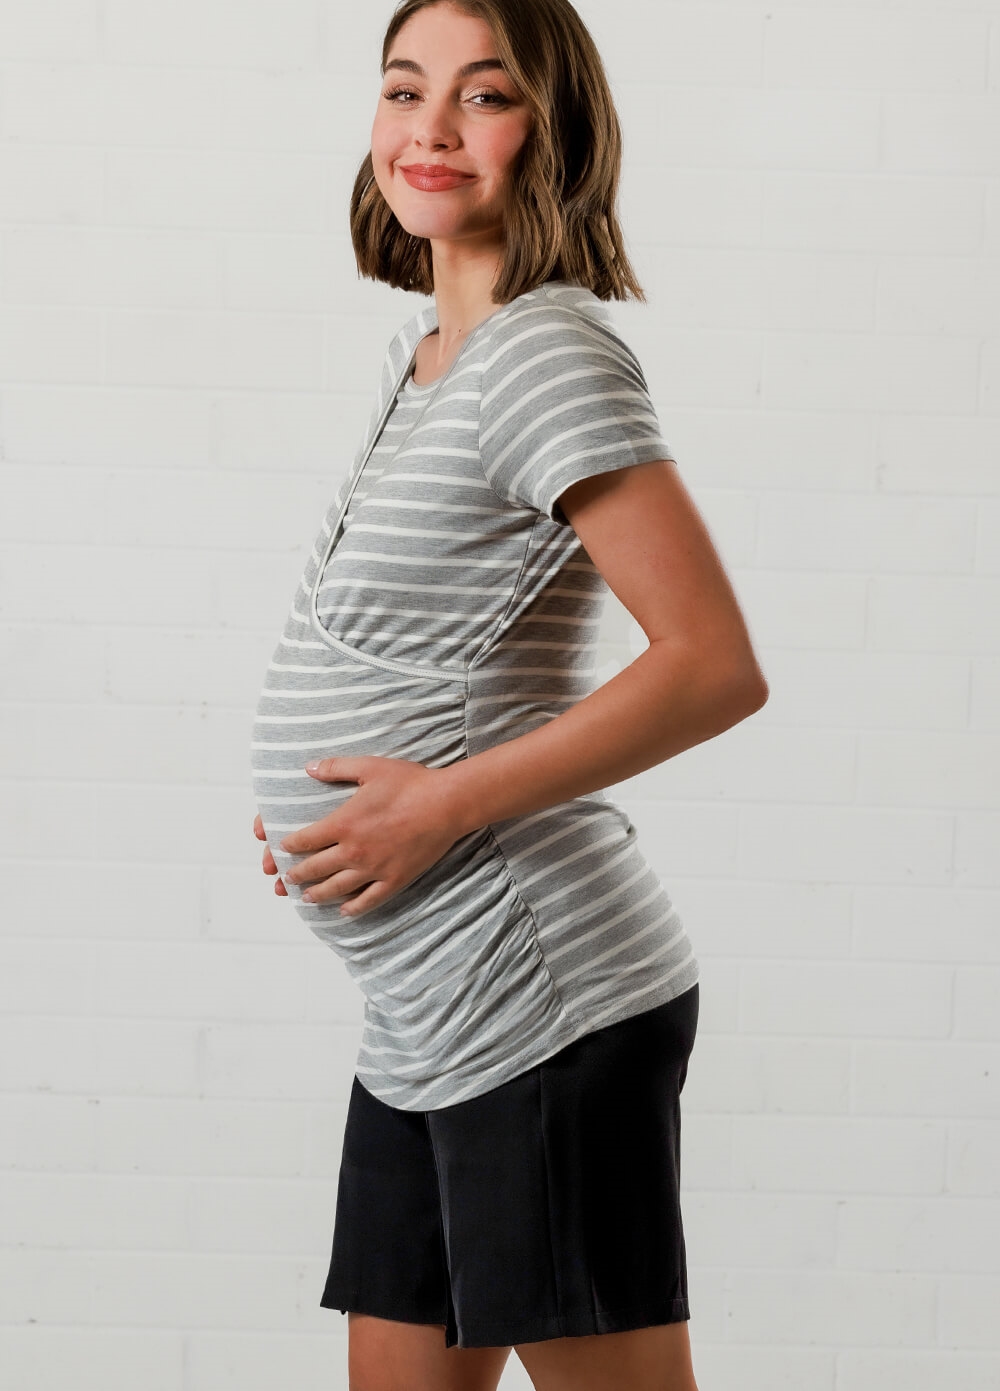 Lait & Co - Laetitia Maternity Nursing Top in Grey Stripe